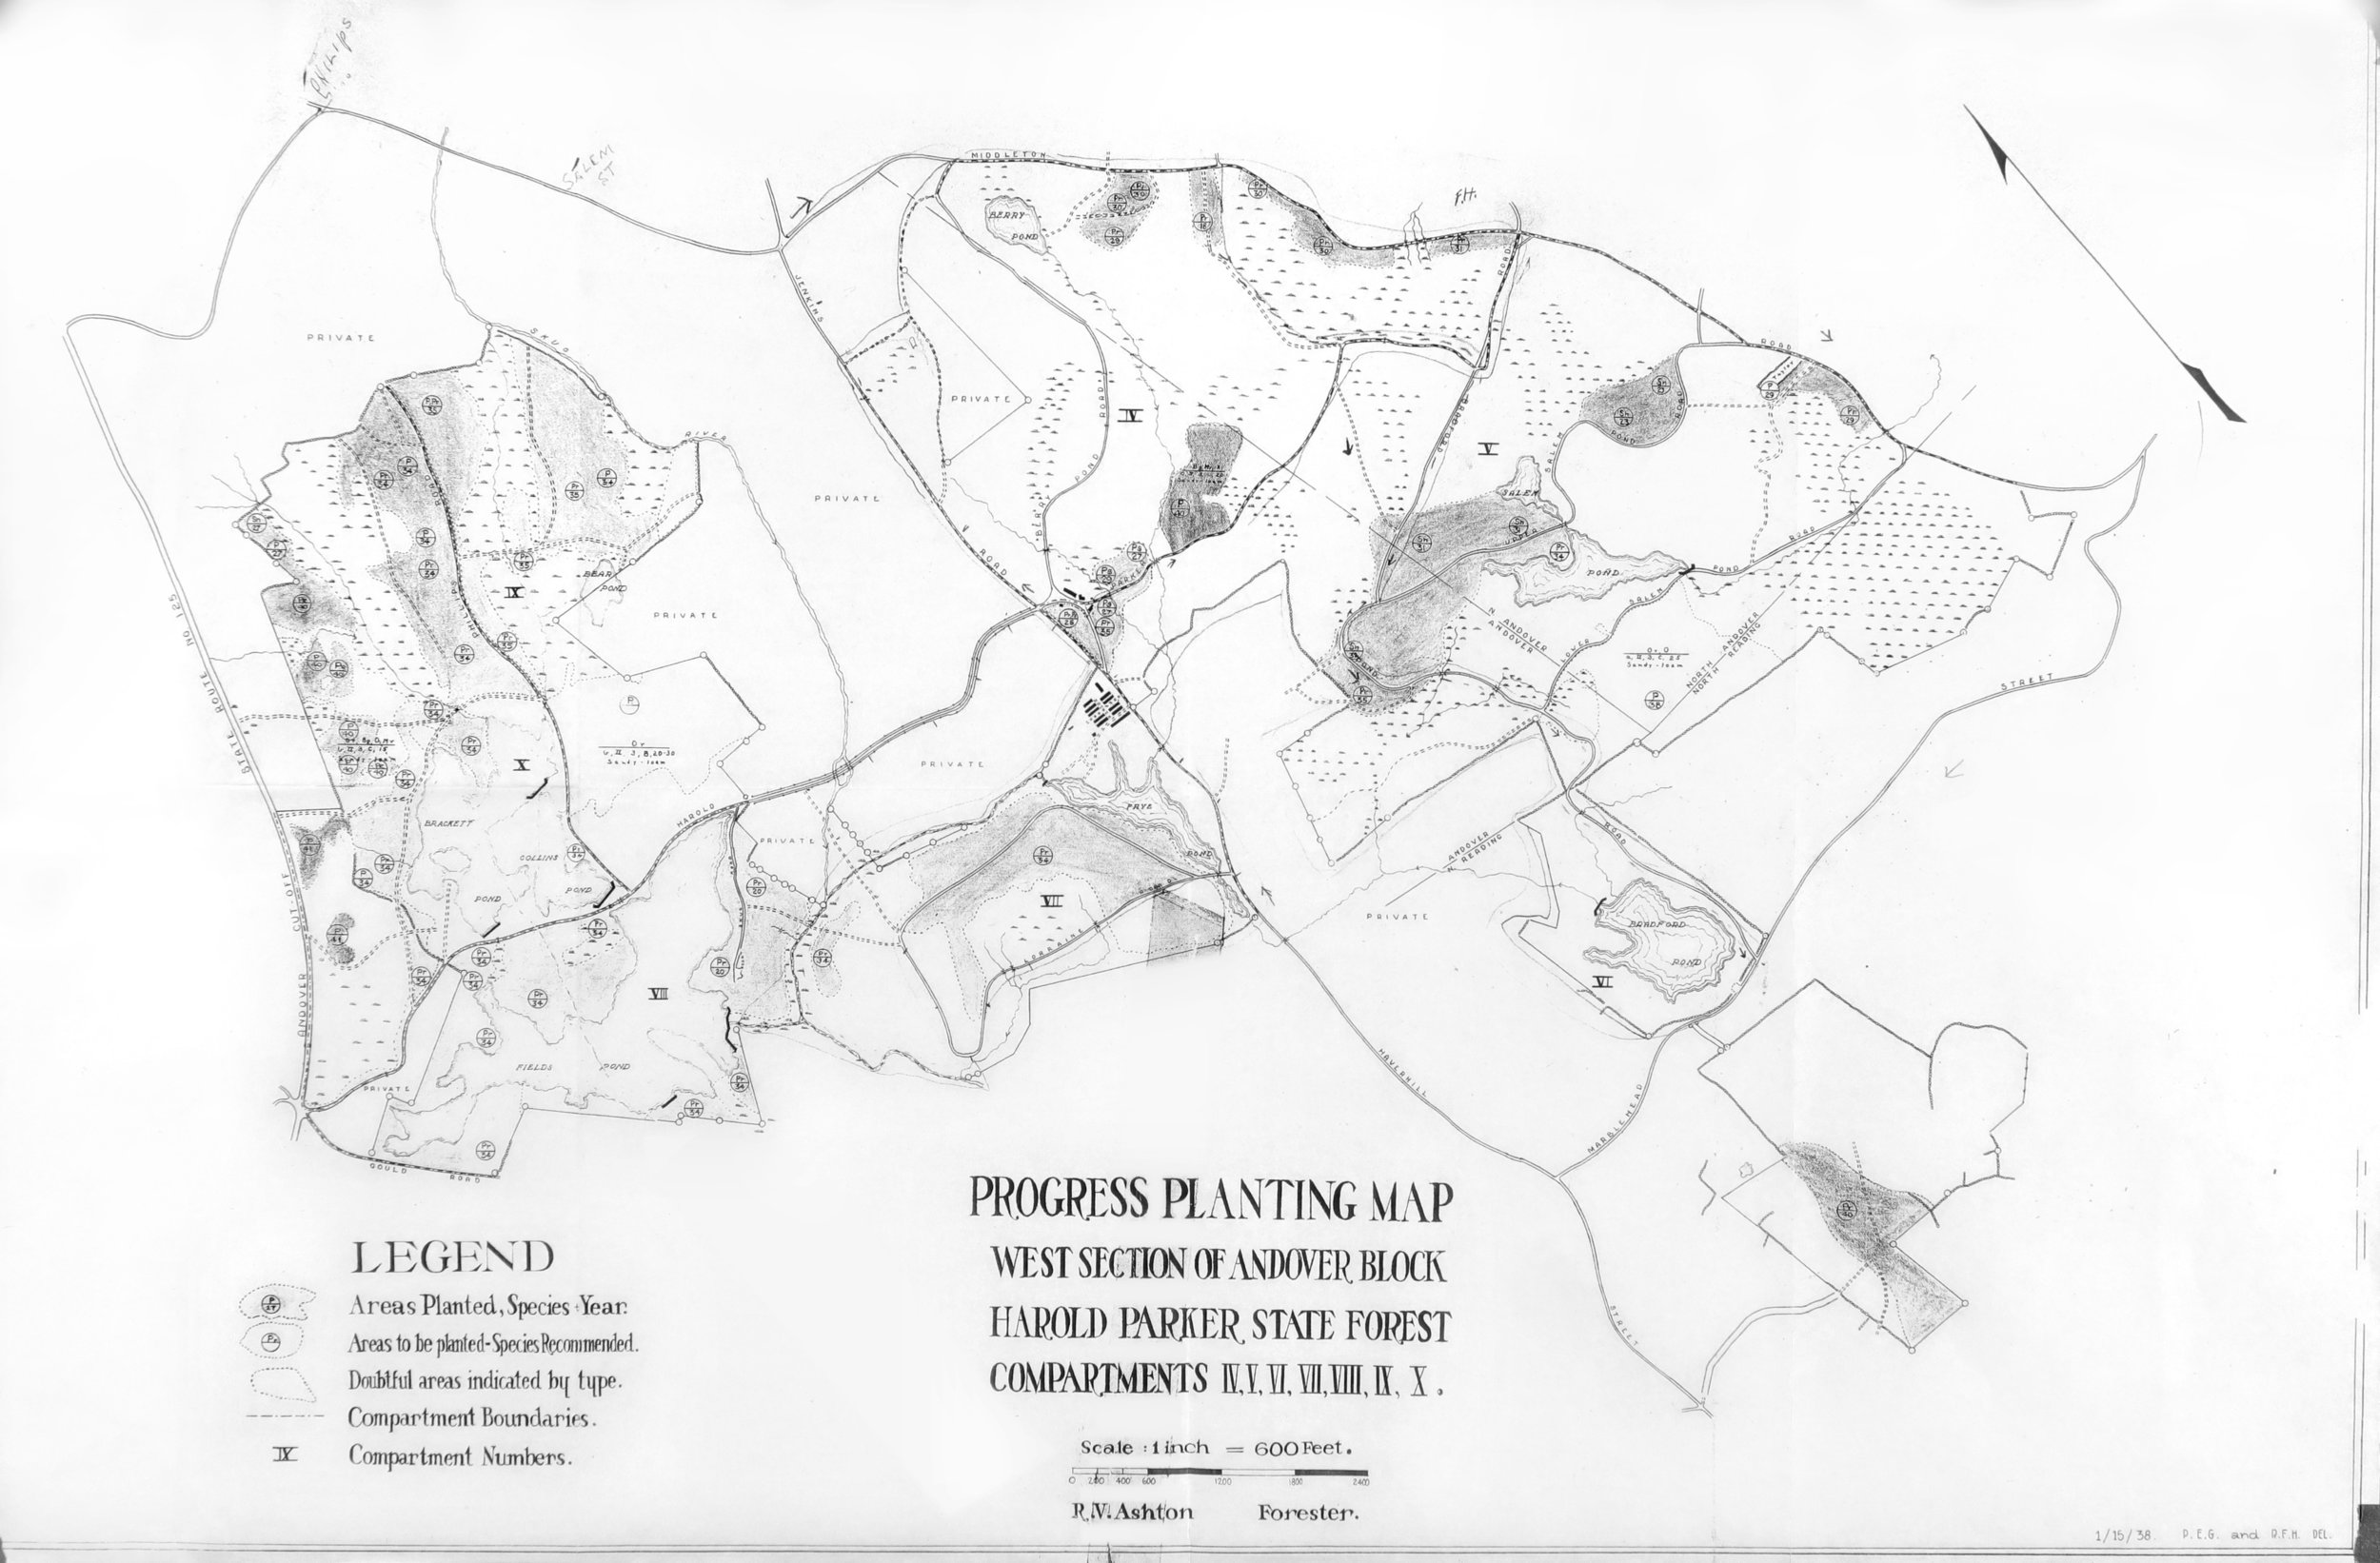 Progress Planting Map 1938